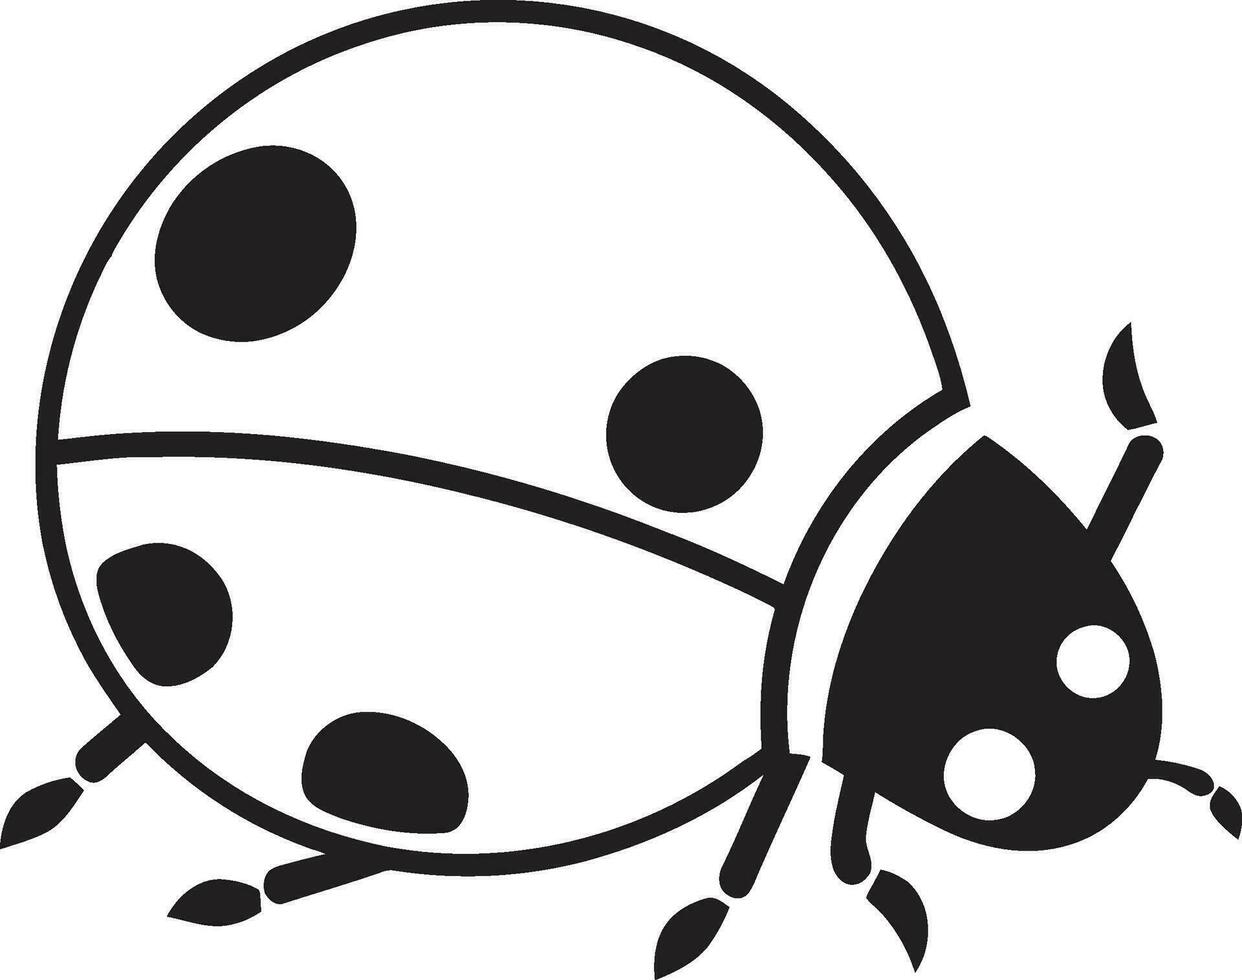 Vectorized Monochrome Ladybug Icon Contemporary Ladybug in the Night vector